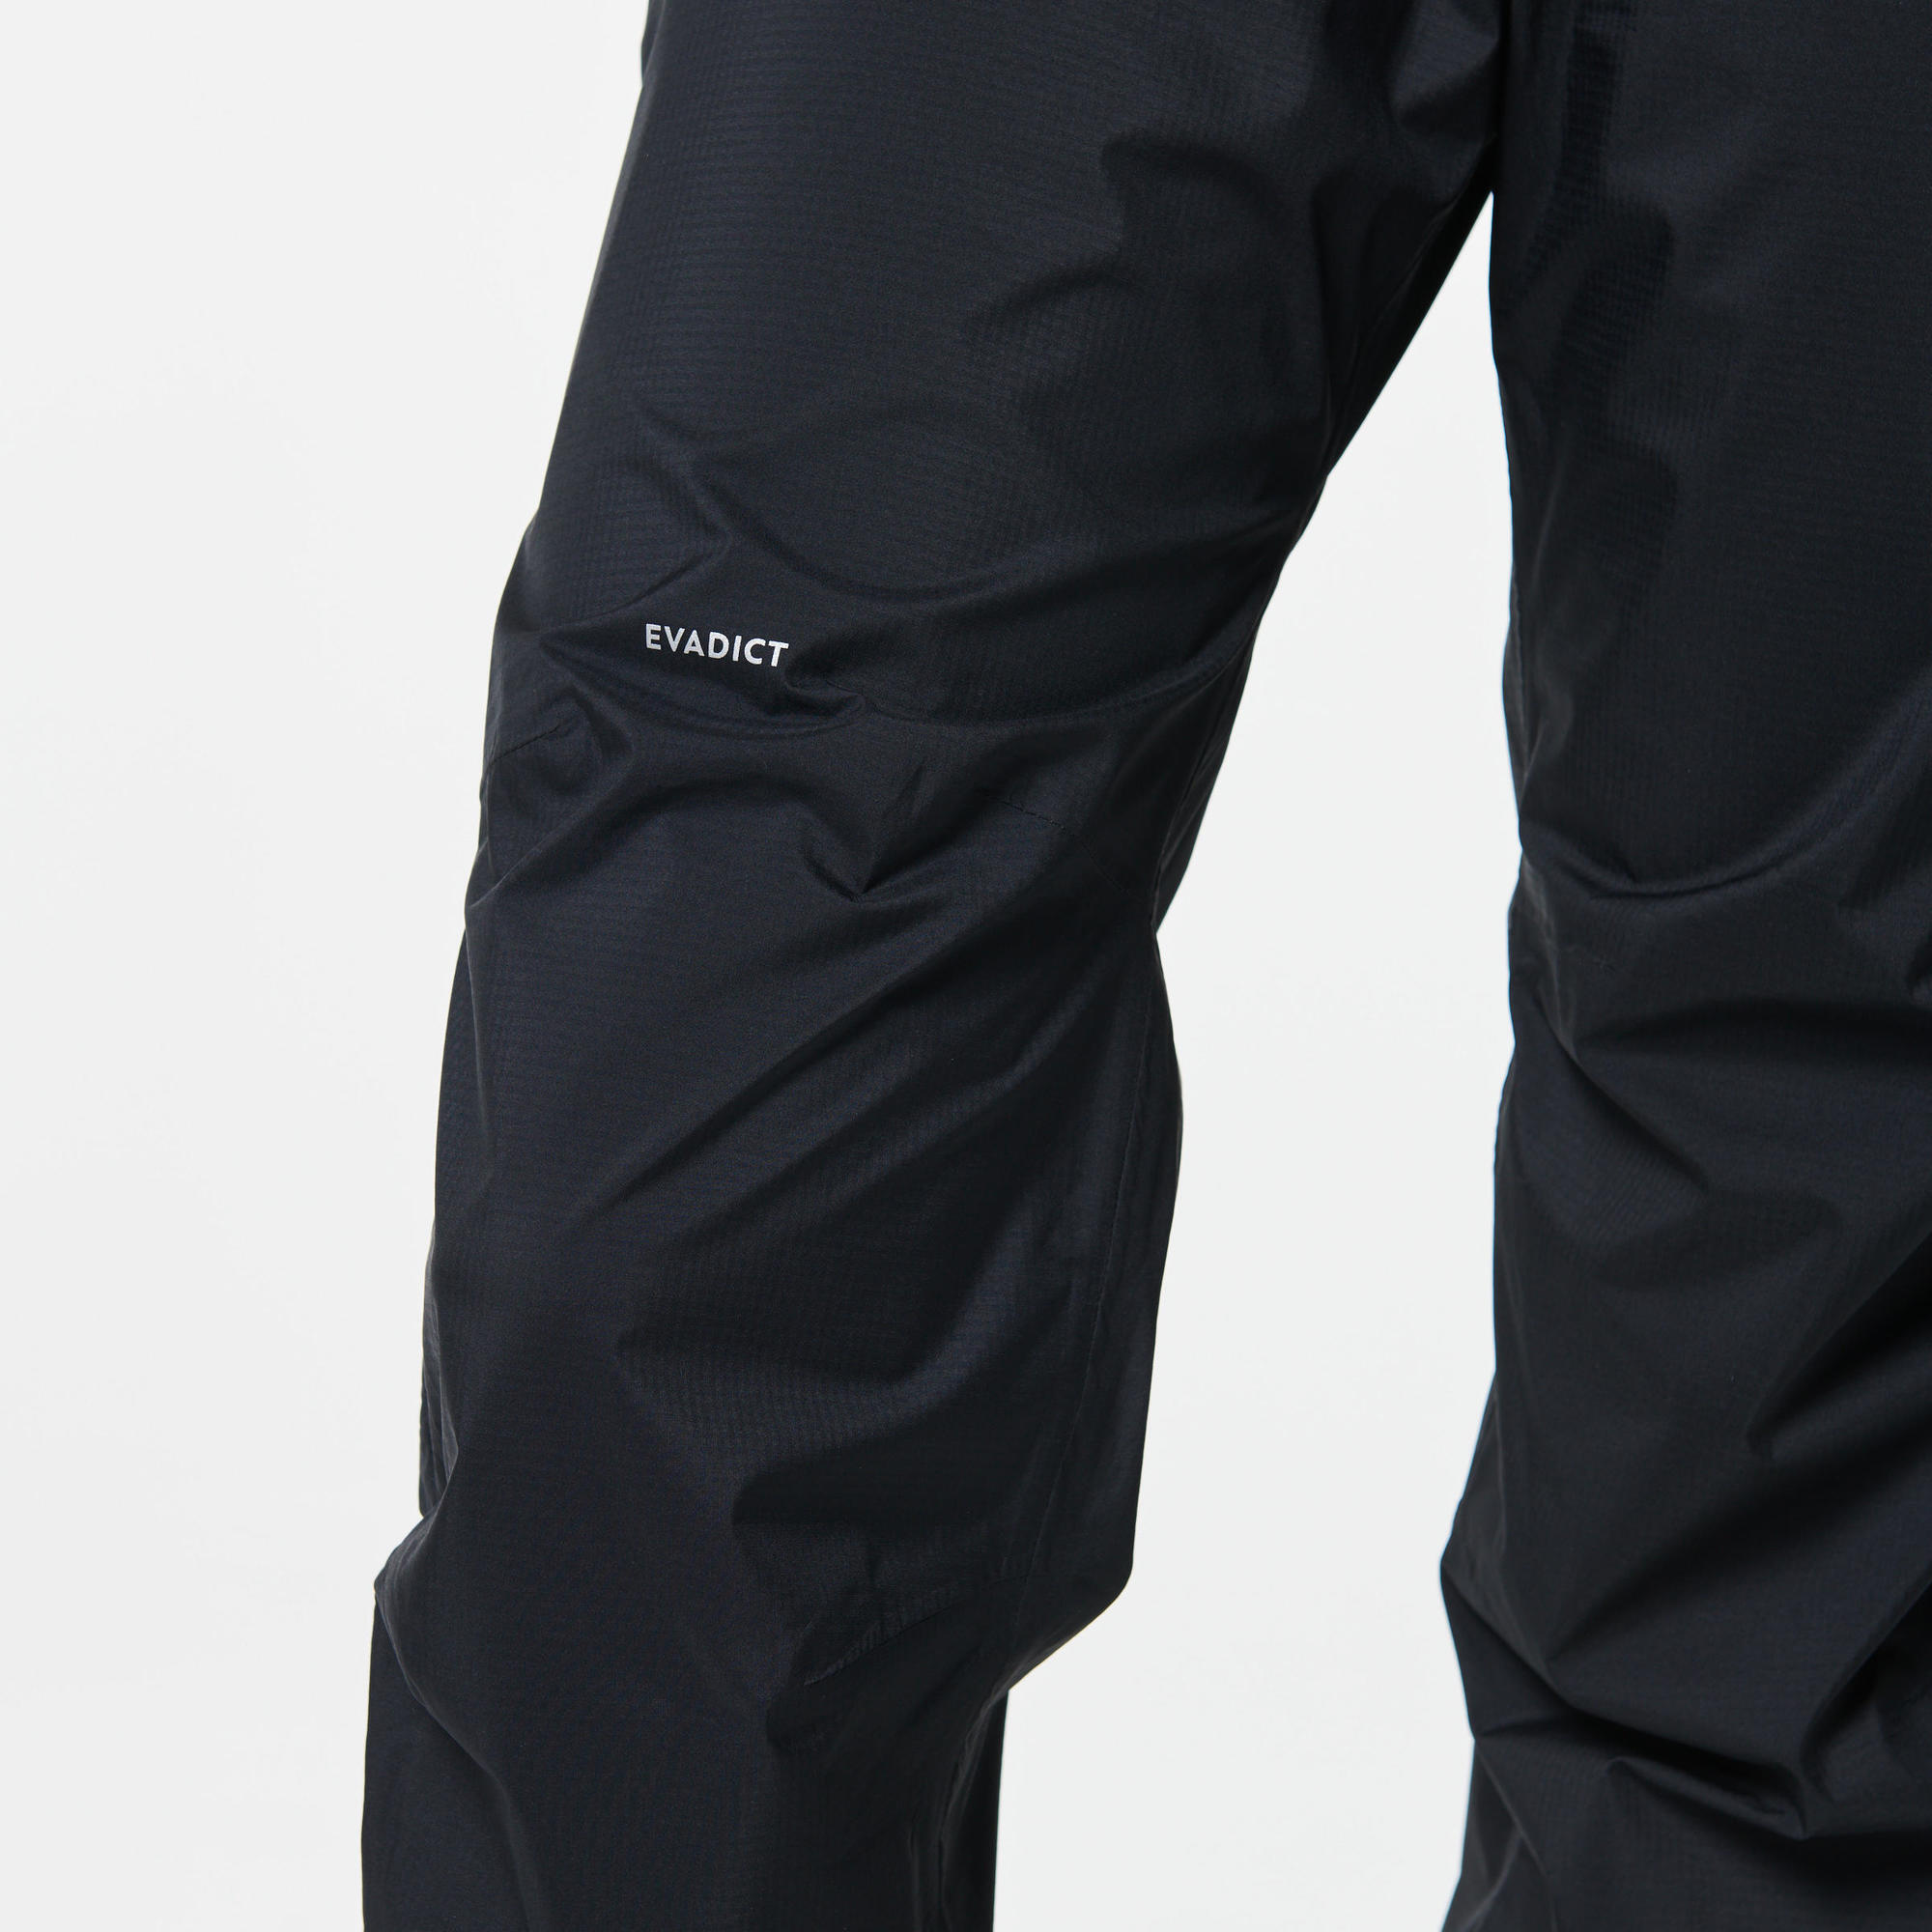 On Waterproof Pants - Running trousers Women's, Buy online